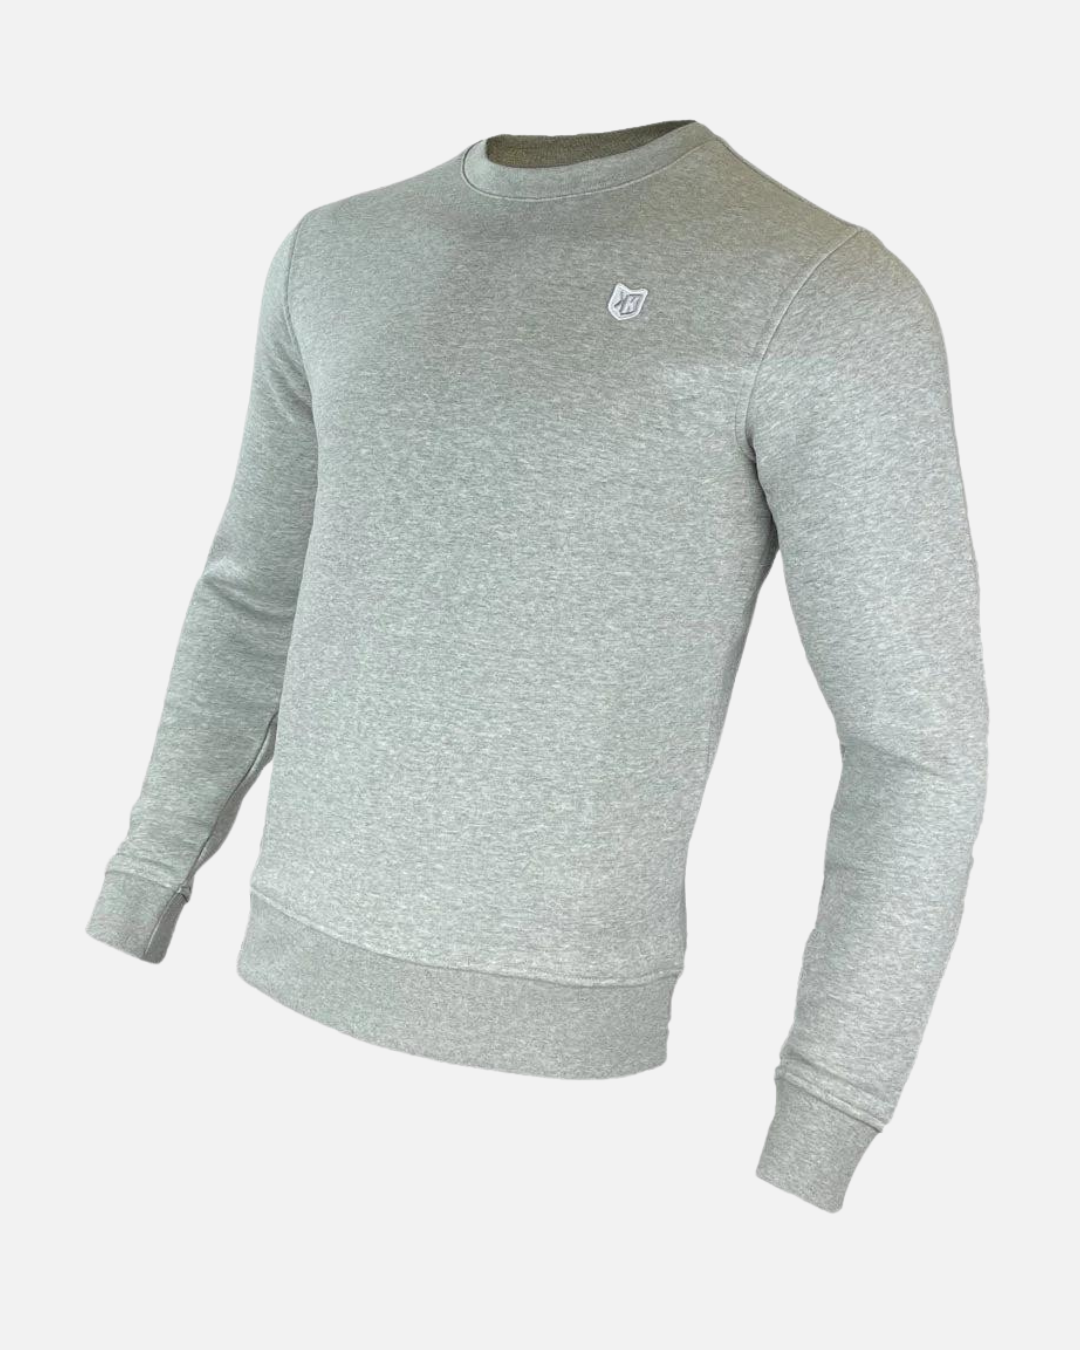 FK Basic Sweatshirt - Gray